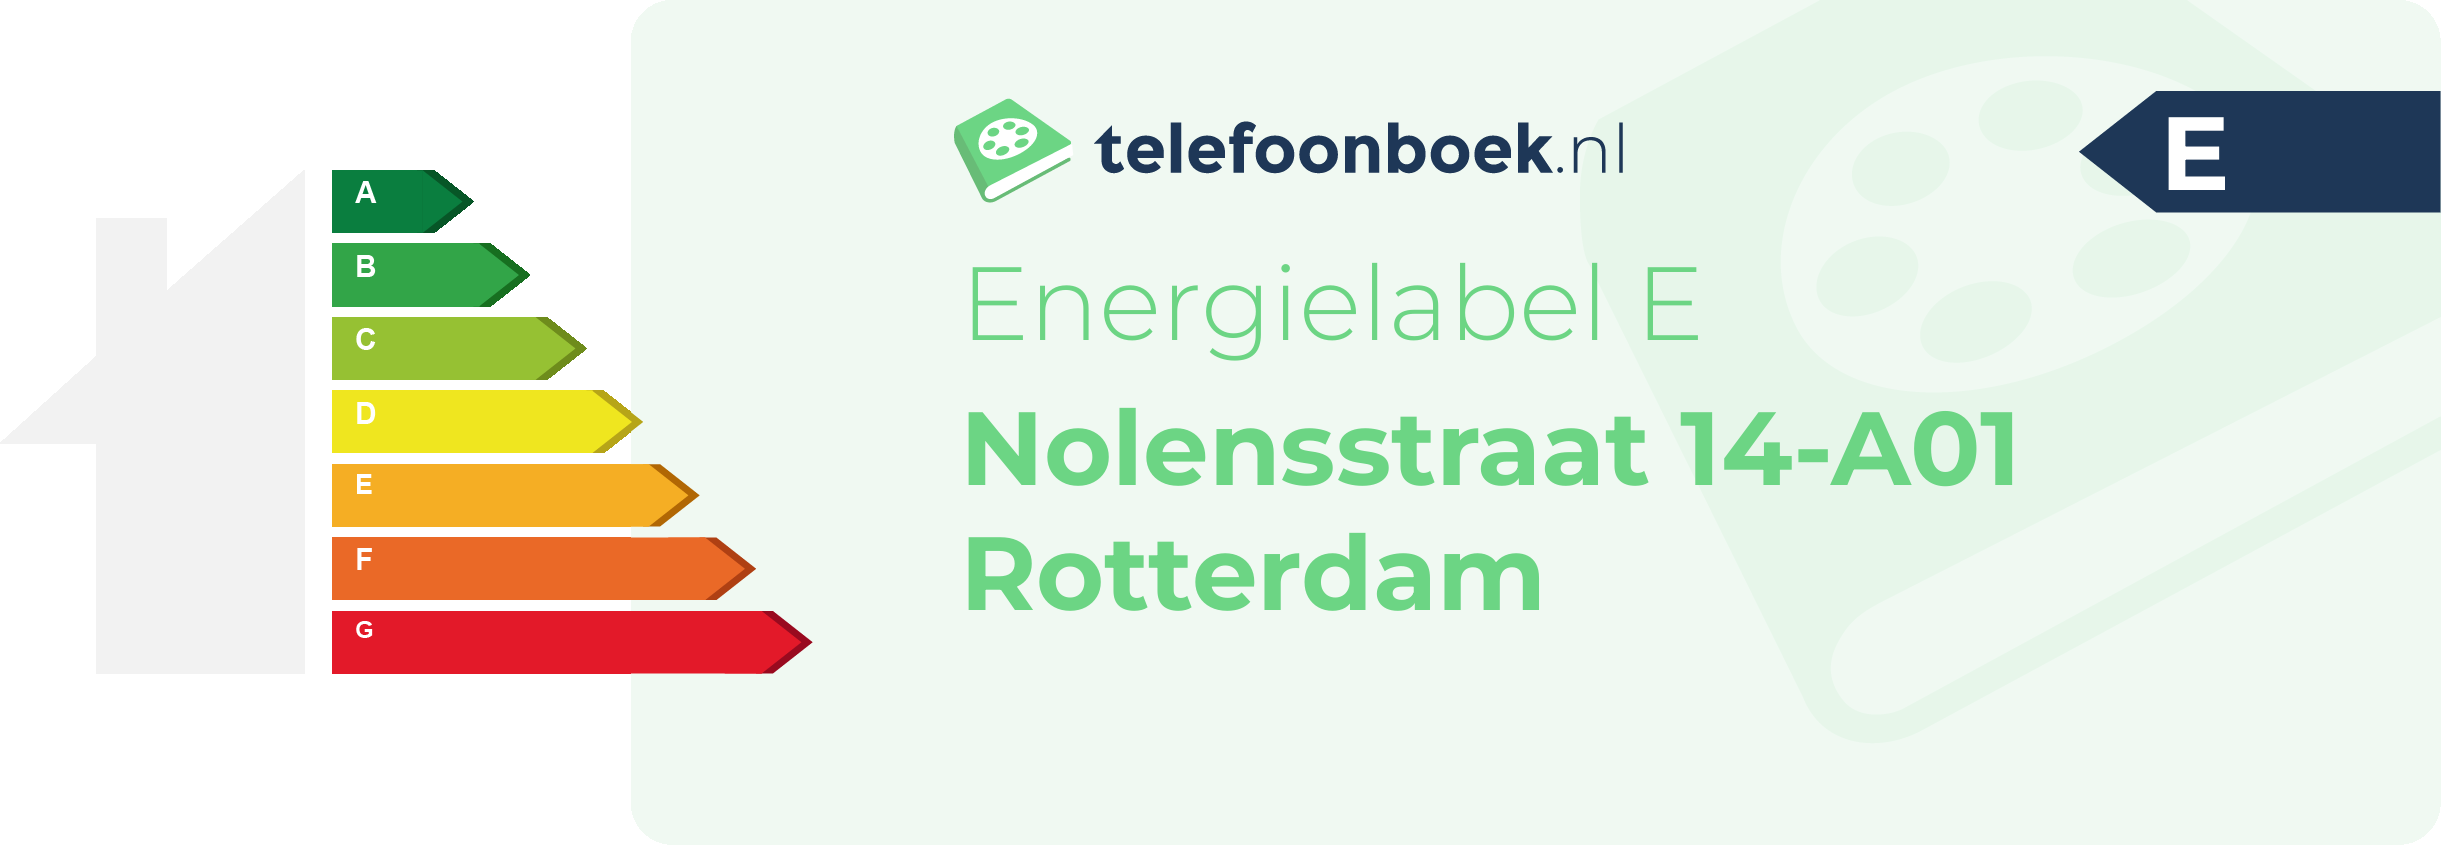 Energielabel Nolensstraat 14-A01 Rotterdam